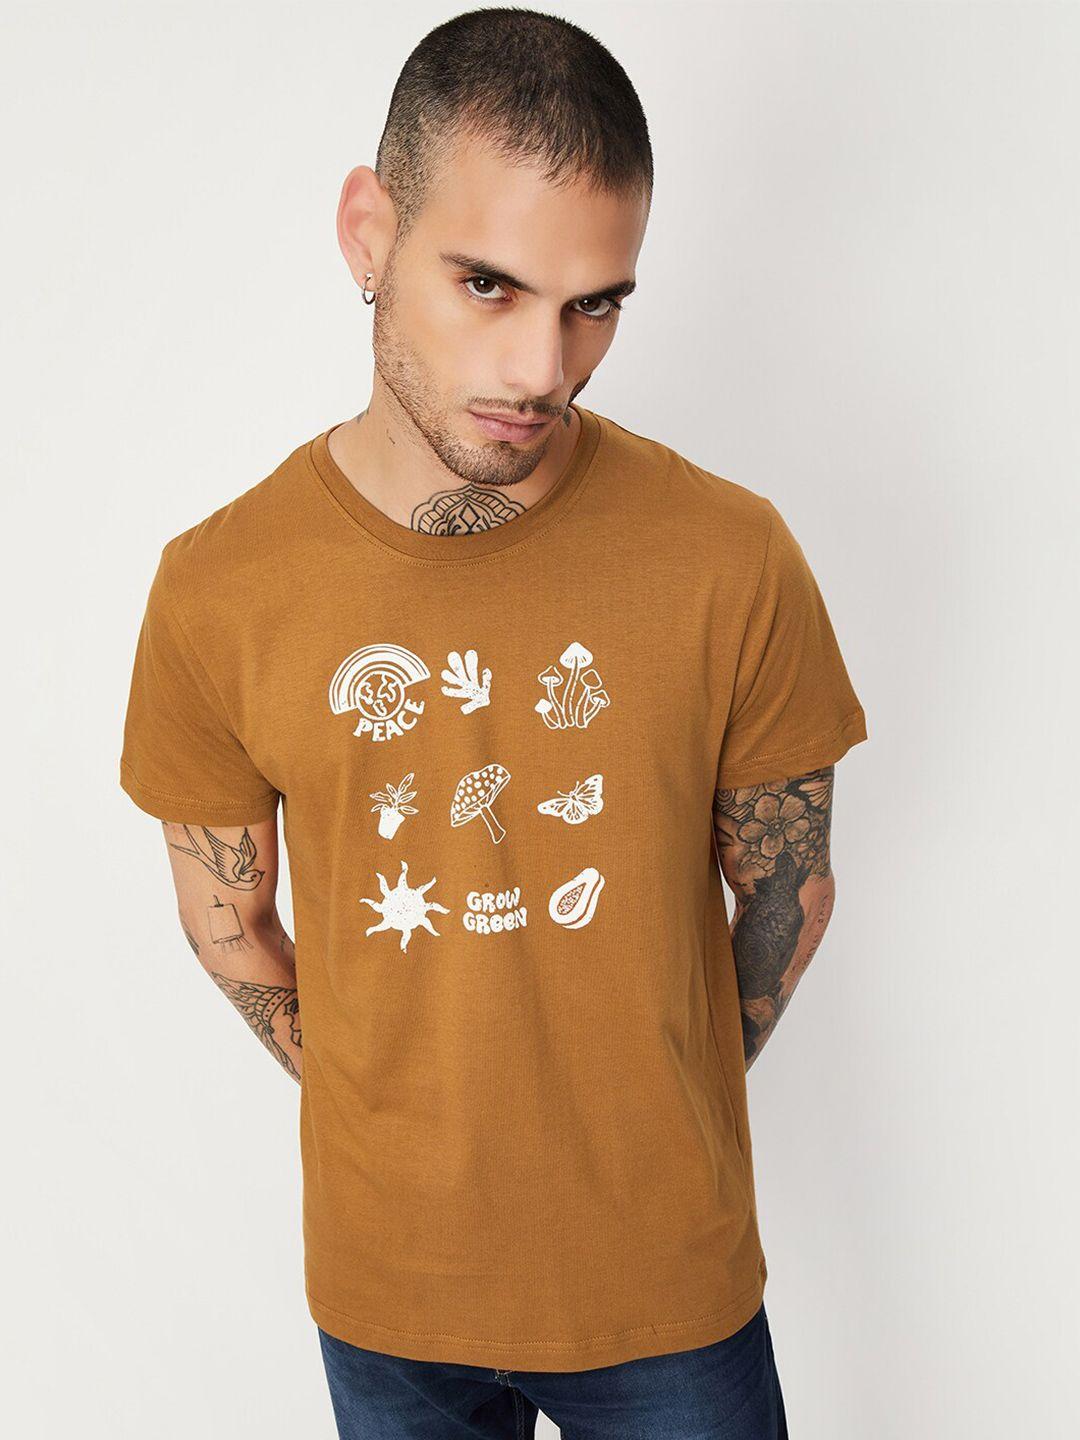 max conversational printed round neck pure cotton t-shirt